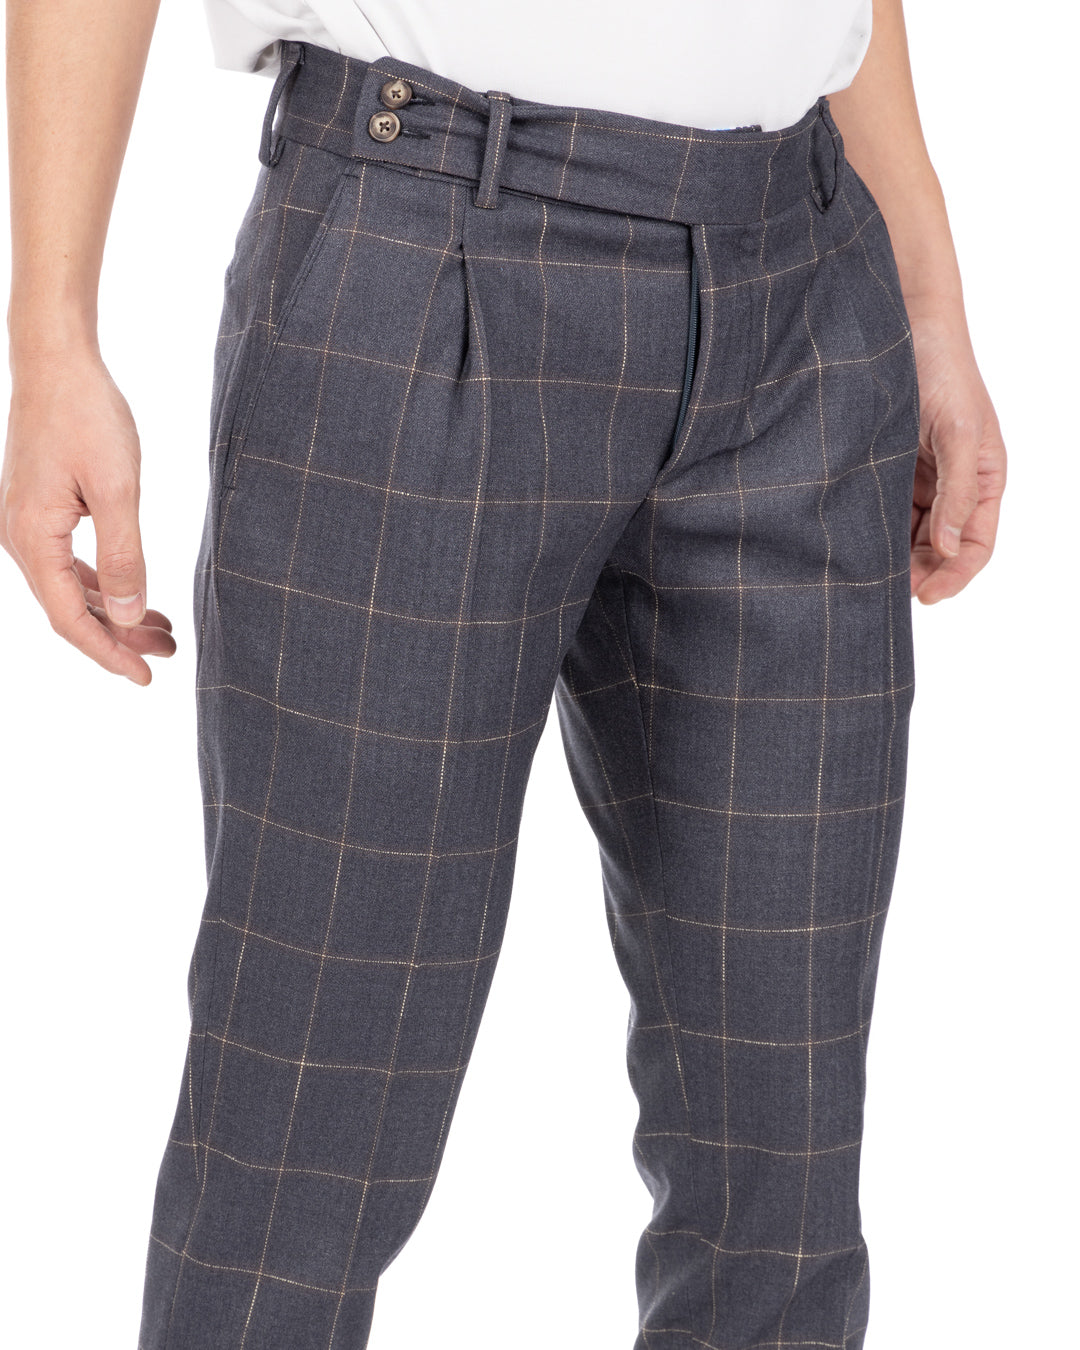 Italian - pantalone vita alta quadro grigio